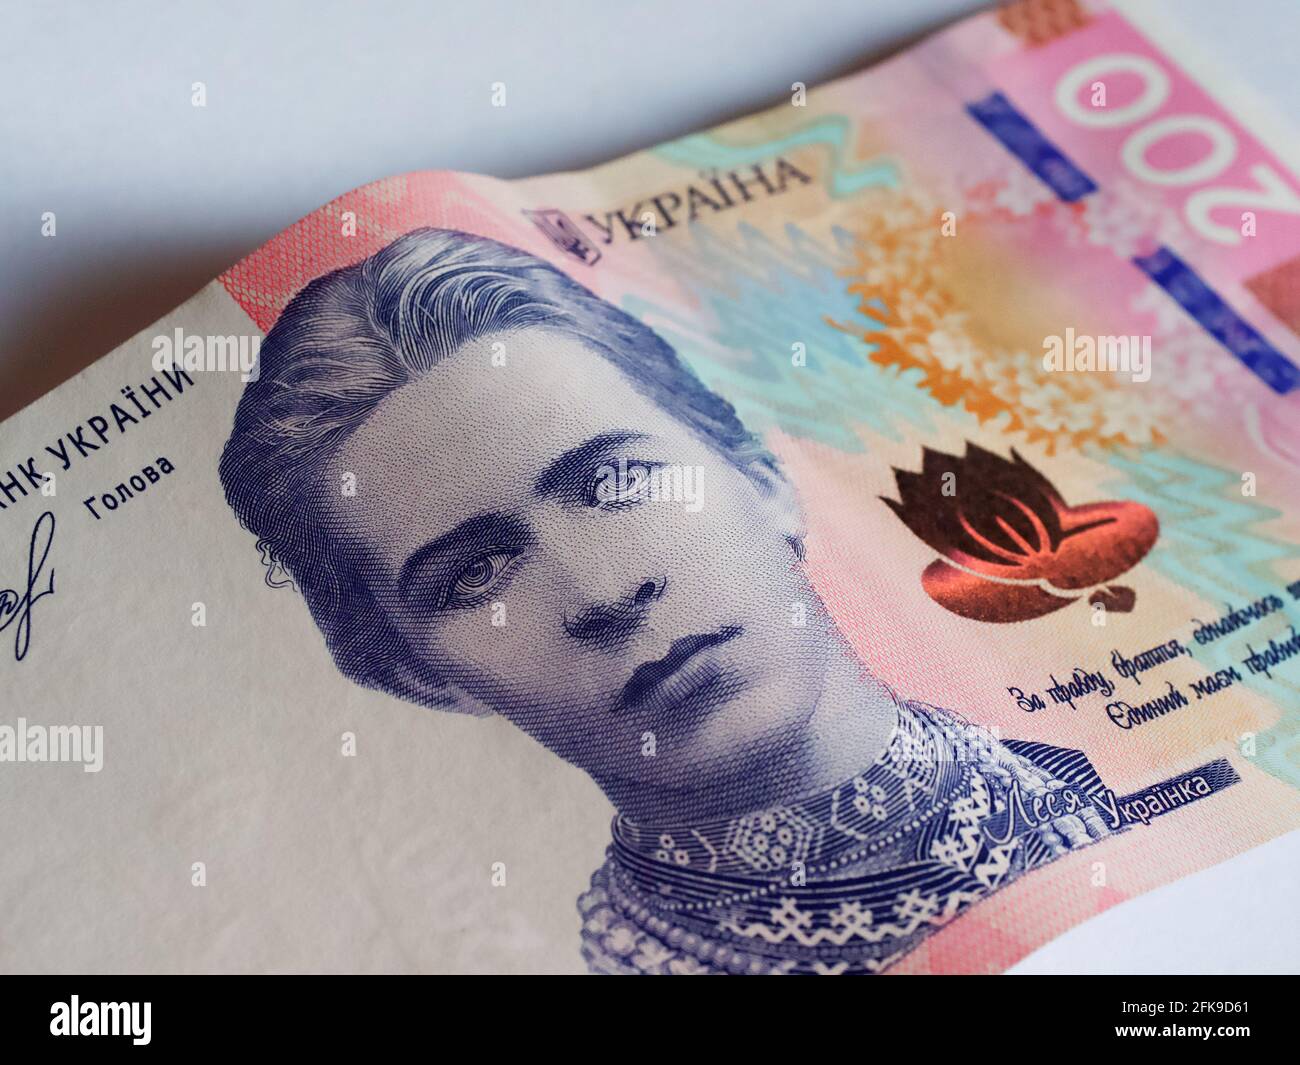 Banknote of 200 hryvnia, close-up. Portrait of poetess Lesya Ukrainka. Stock Photo